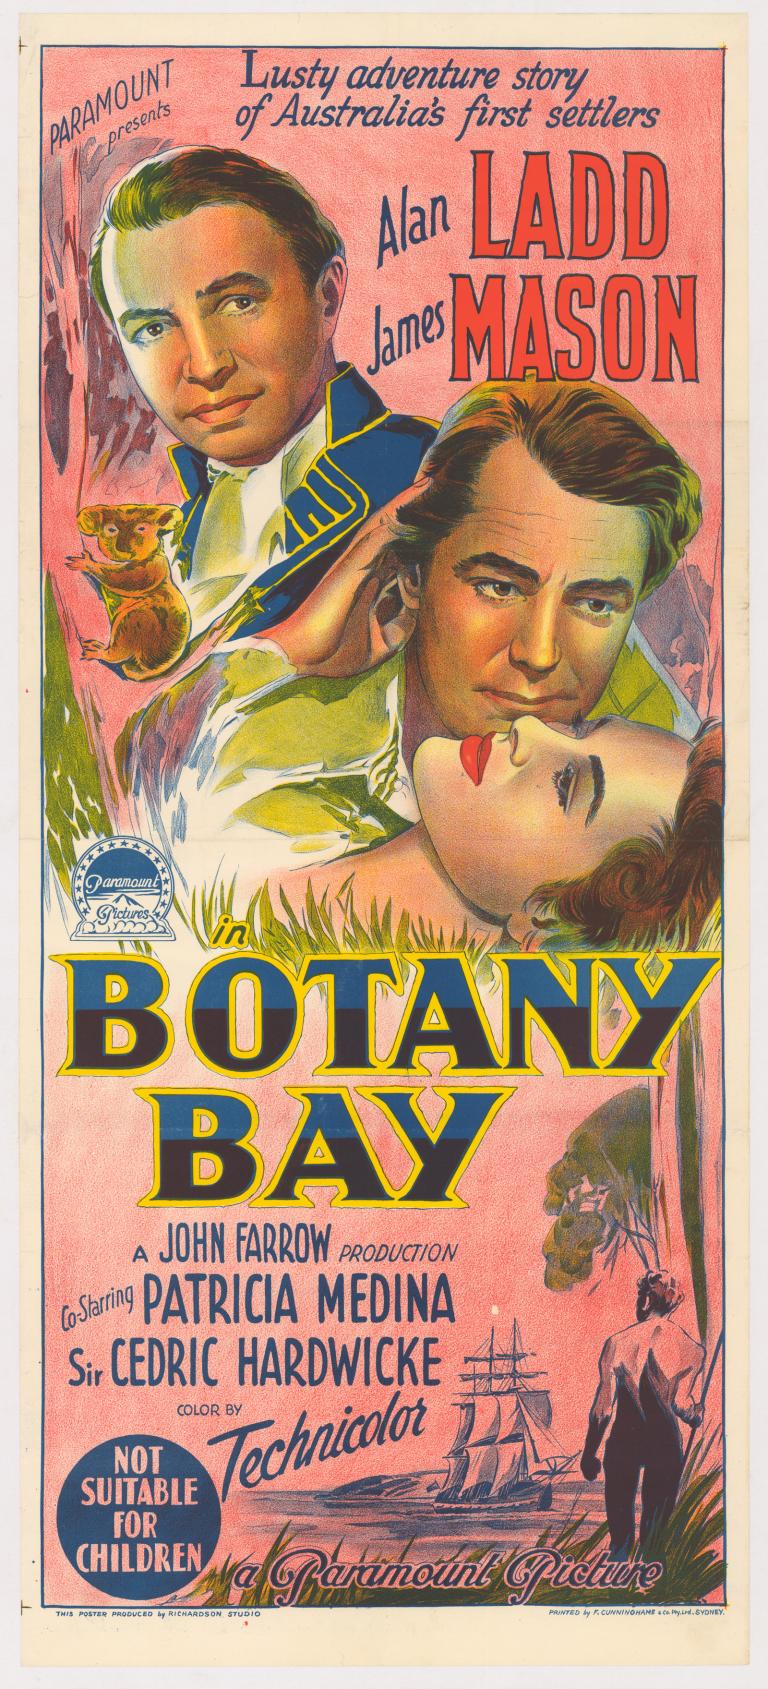 Poster for film titled Botany Bay.